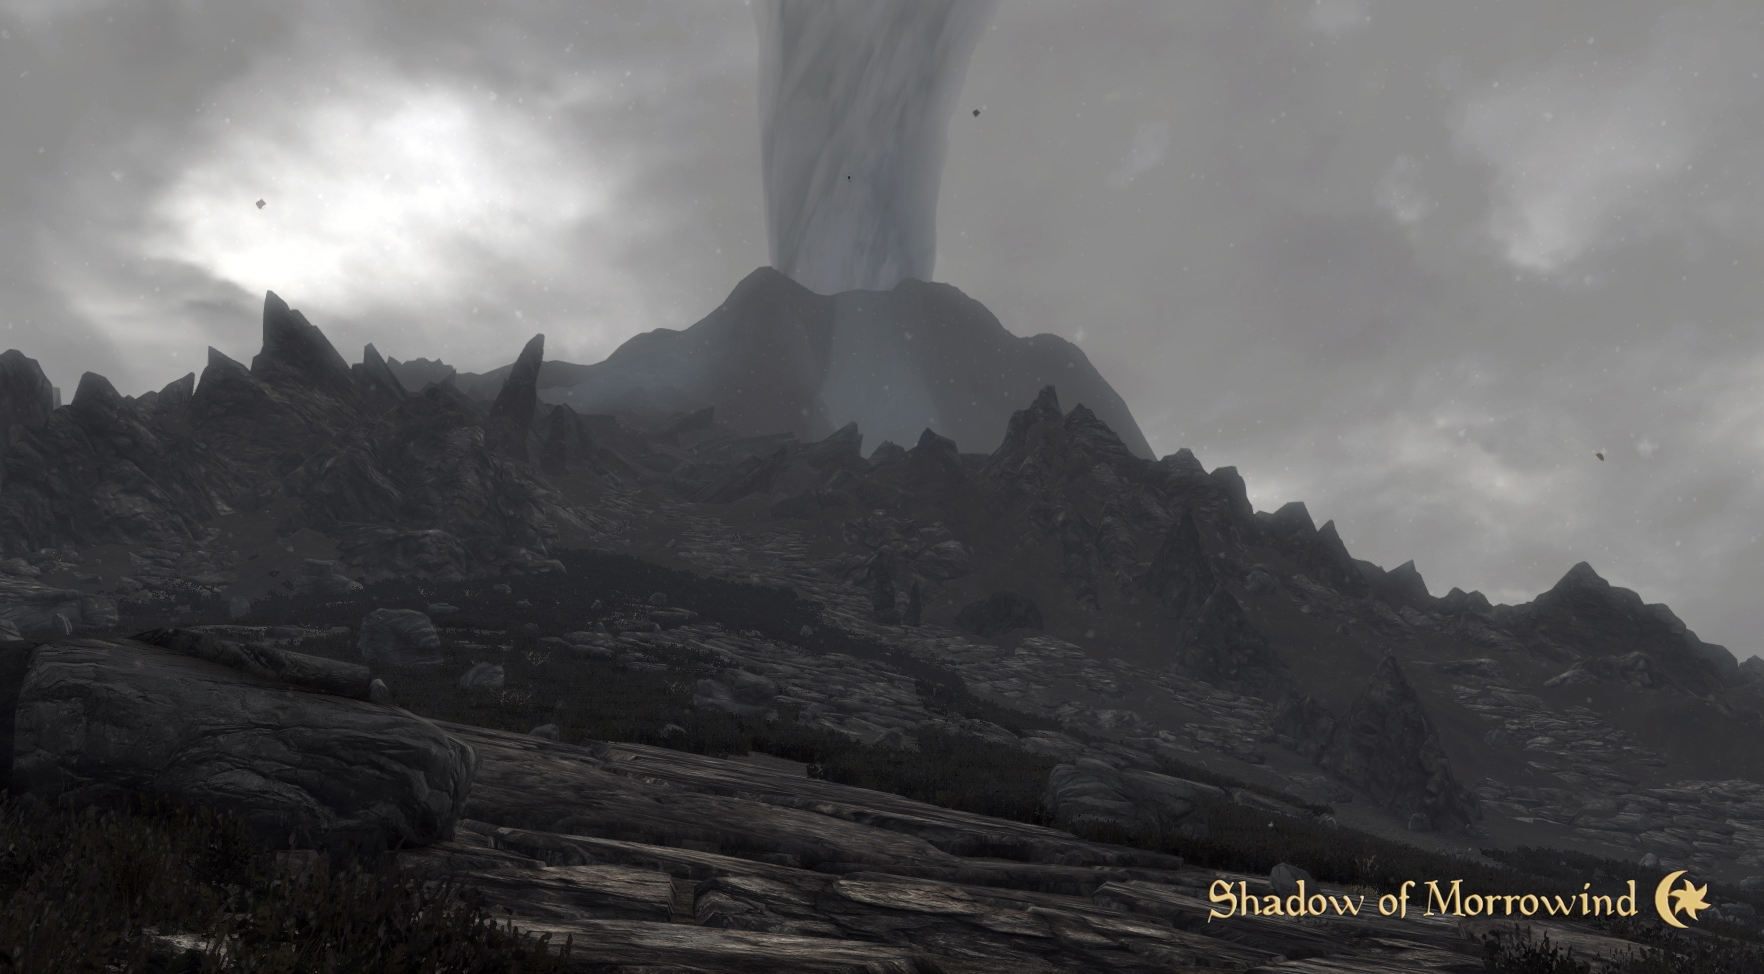 høj system undulate The Red Mountain image - Shadow of Morrowind mod for Elder Scrolls V:  Skyrim - Mod DB